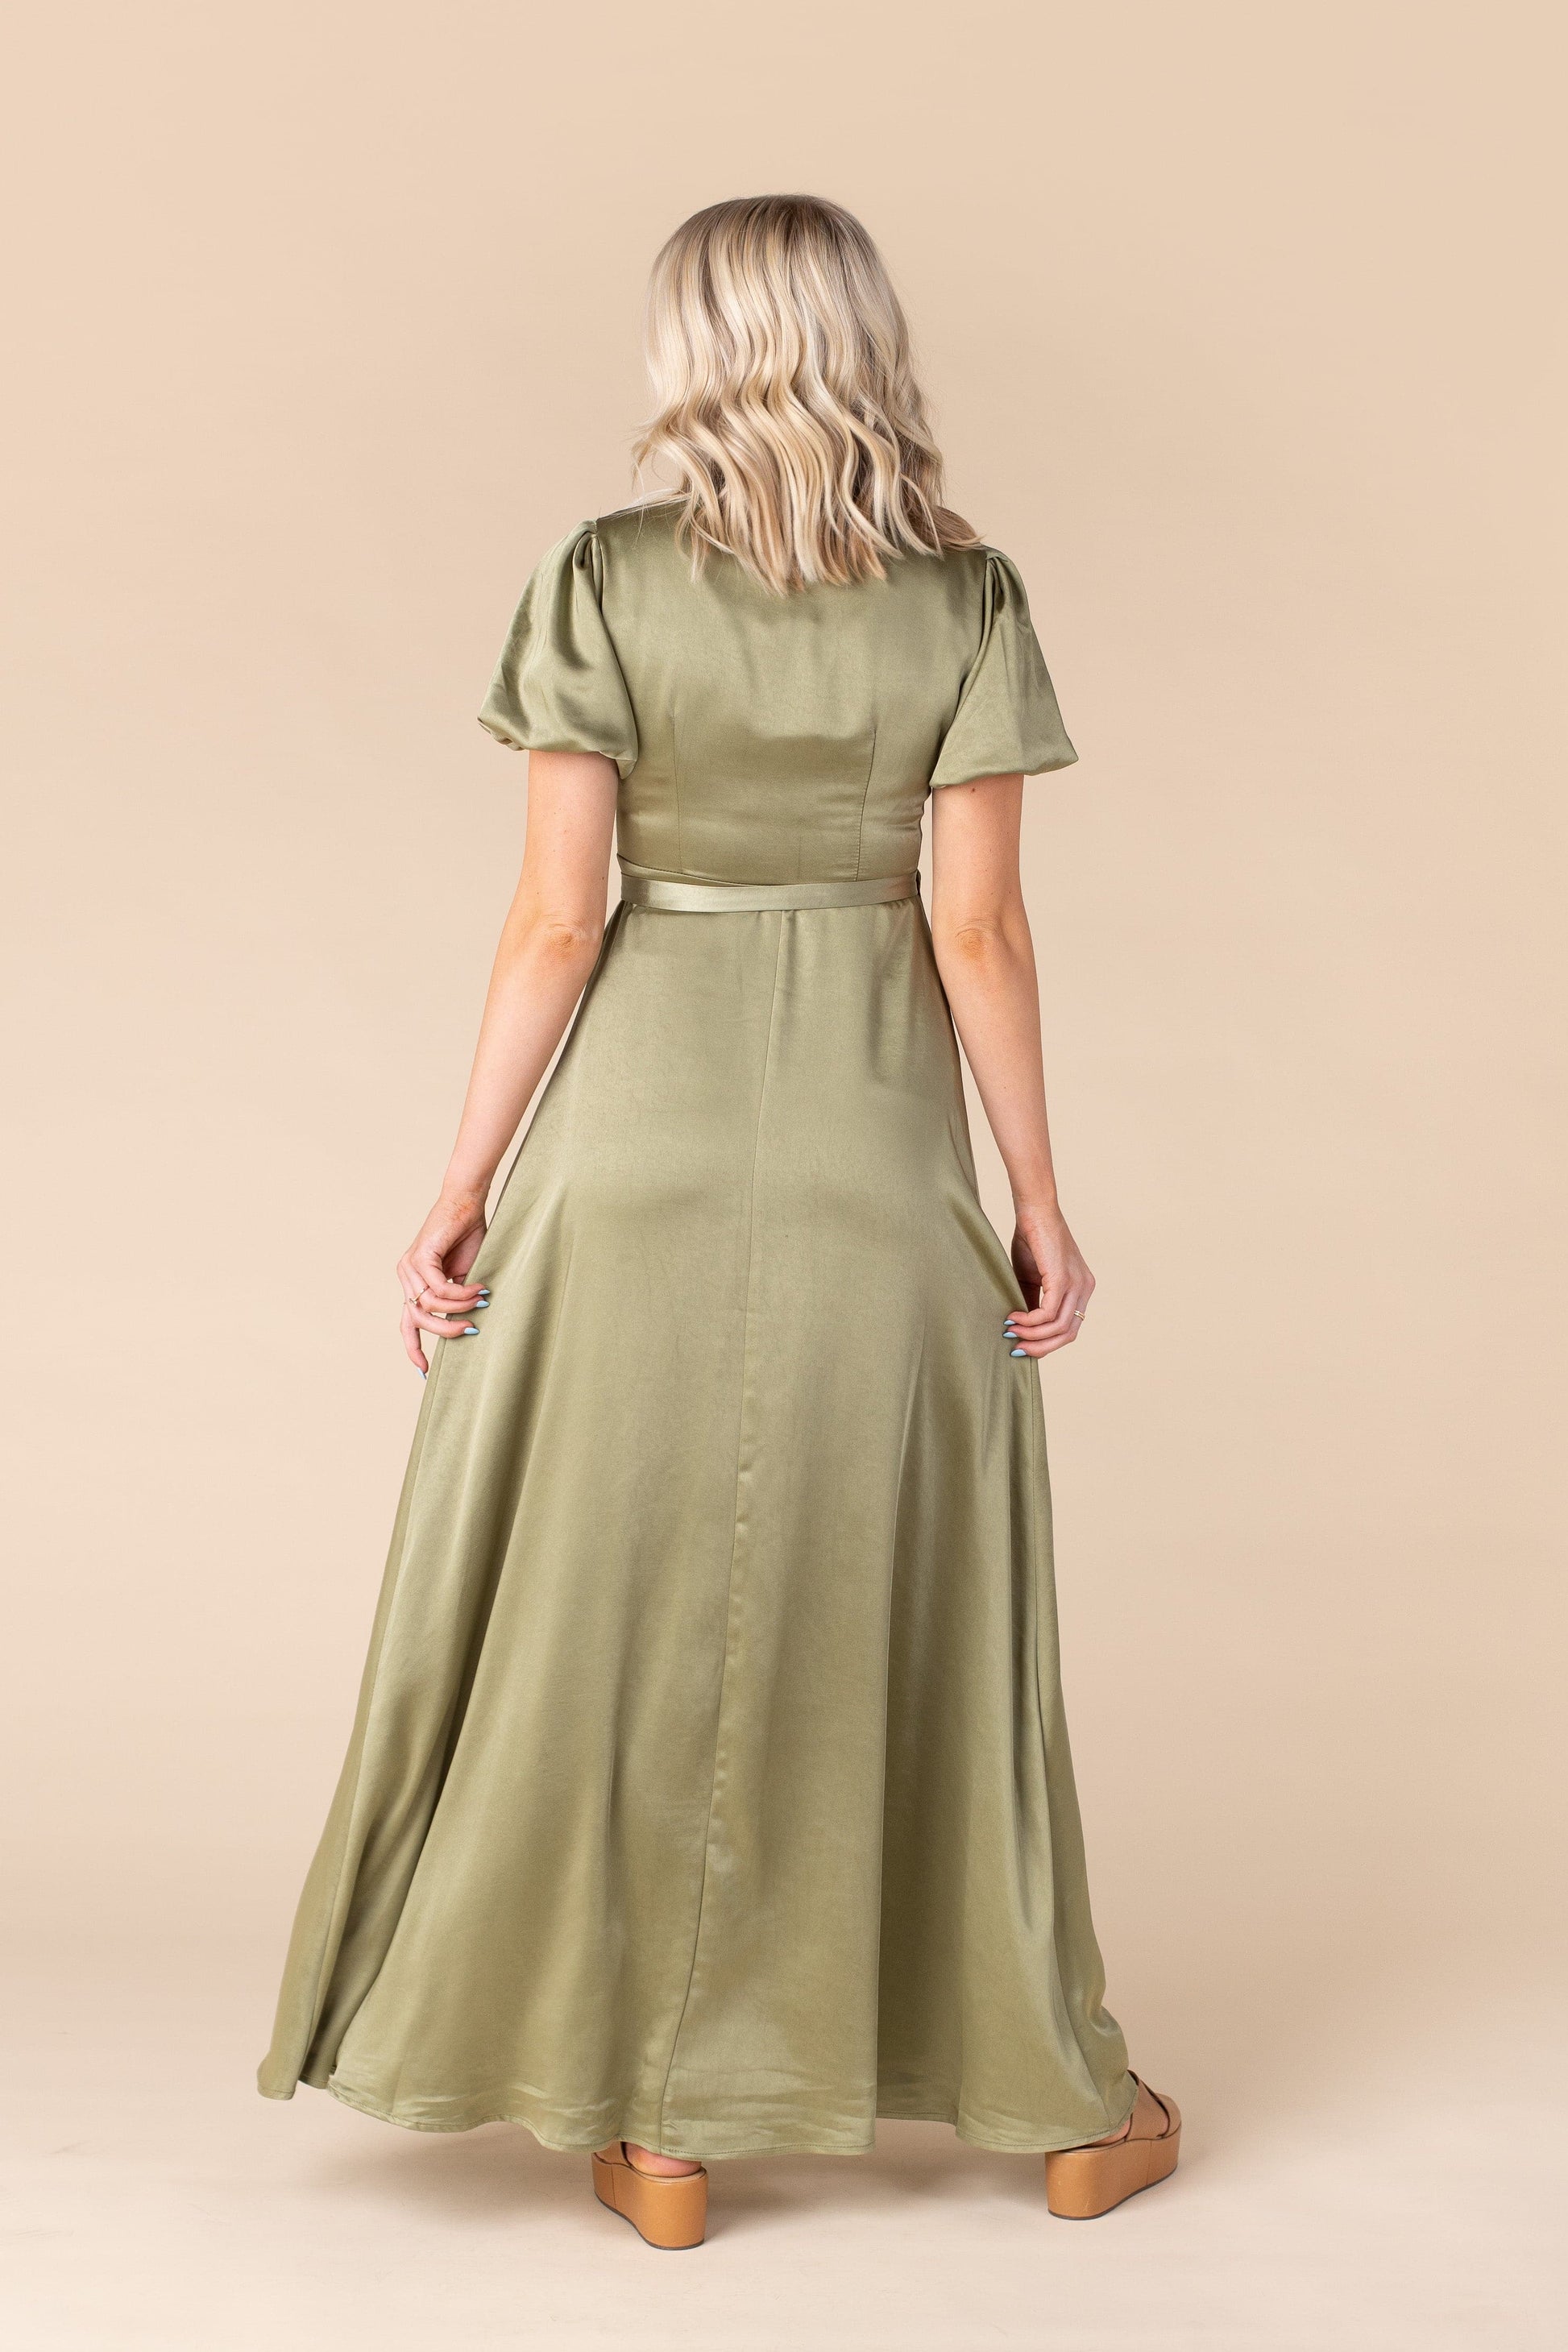 Ava Satin Dress - Moss Bridesmaid Dress Arbor 